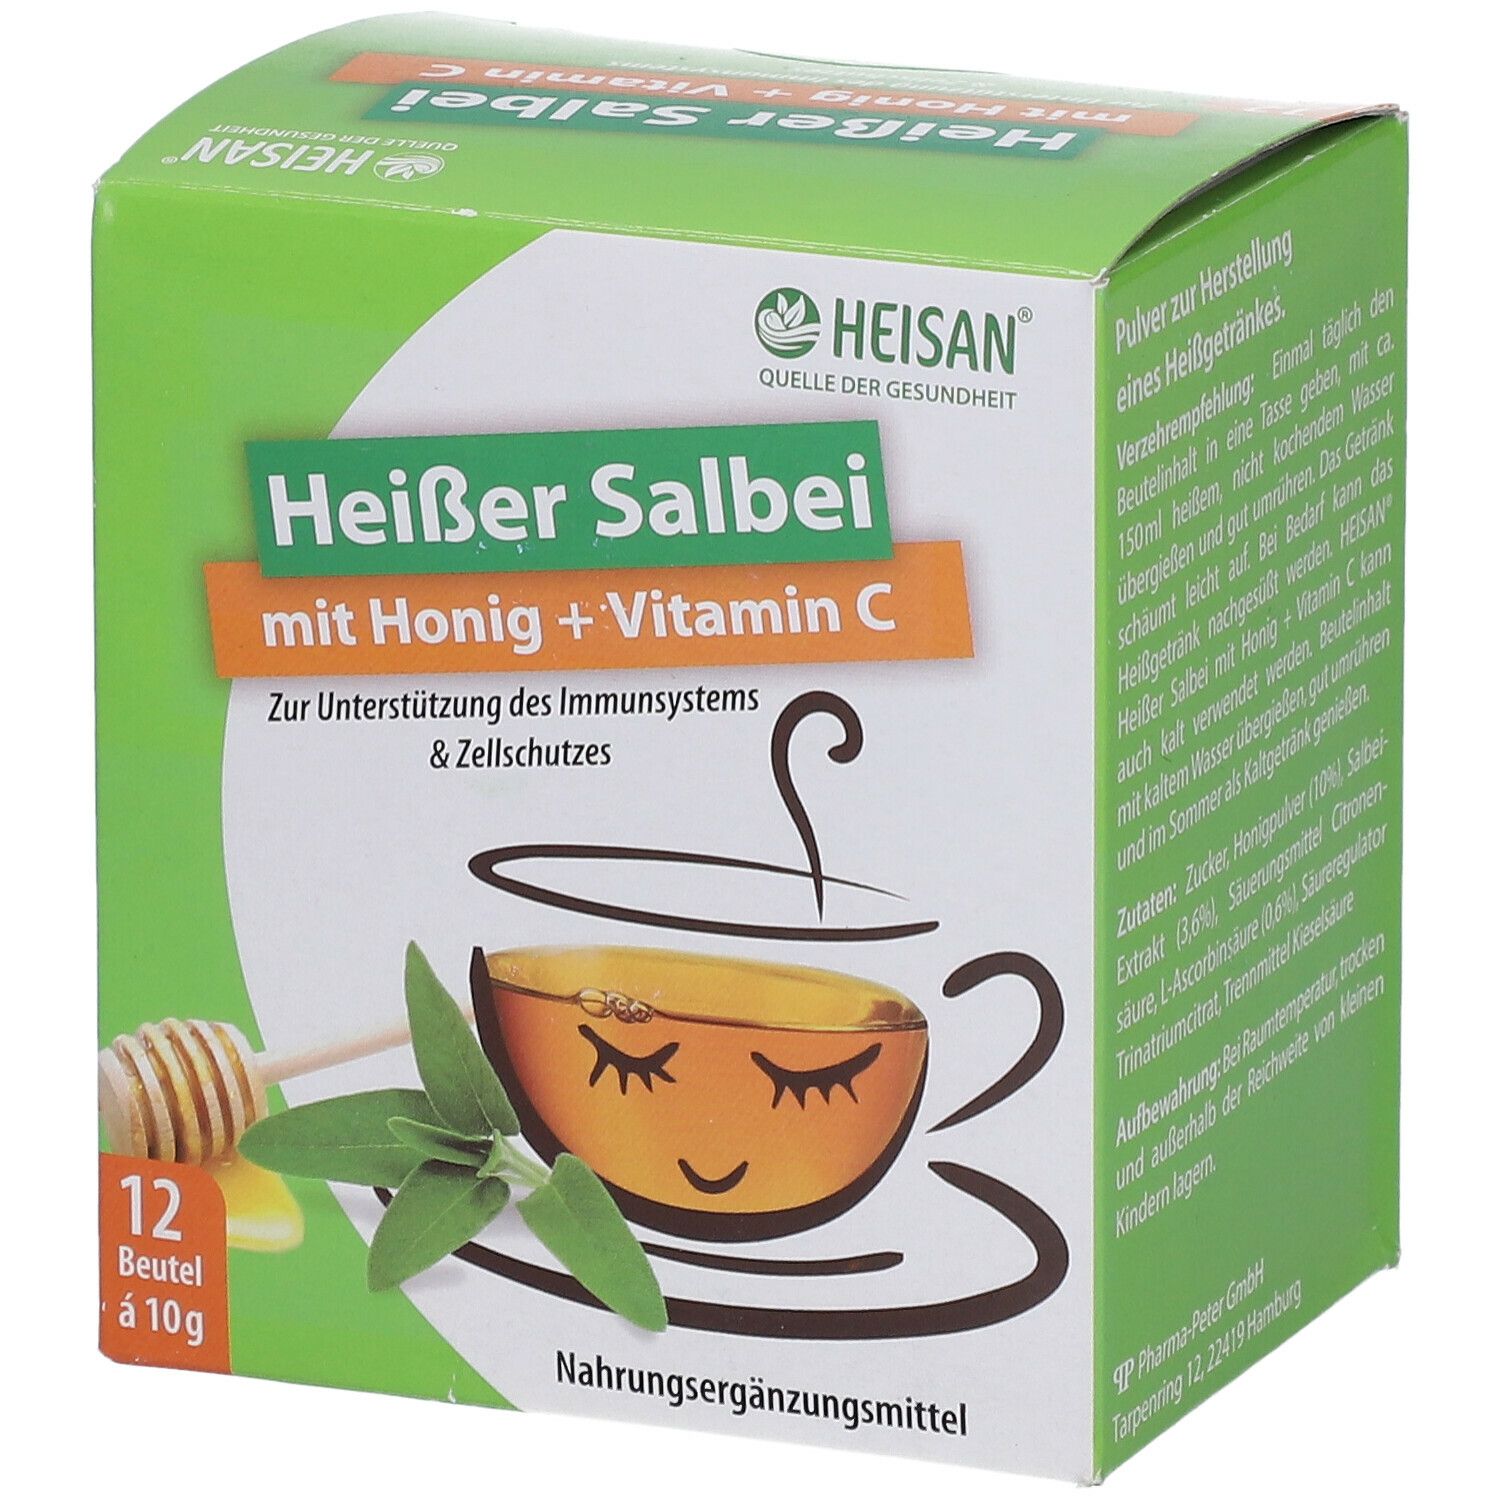 HEISAN® Heißer Salbei + Honig + Vitamin